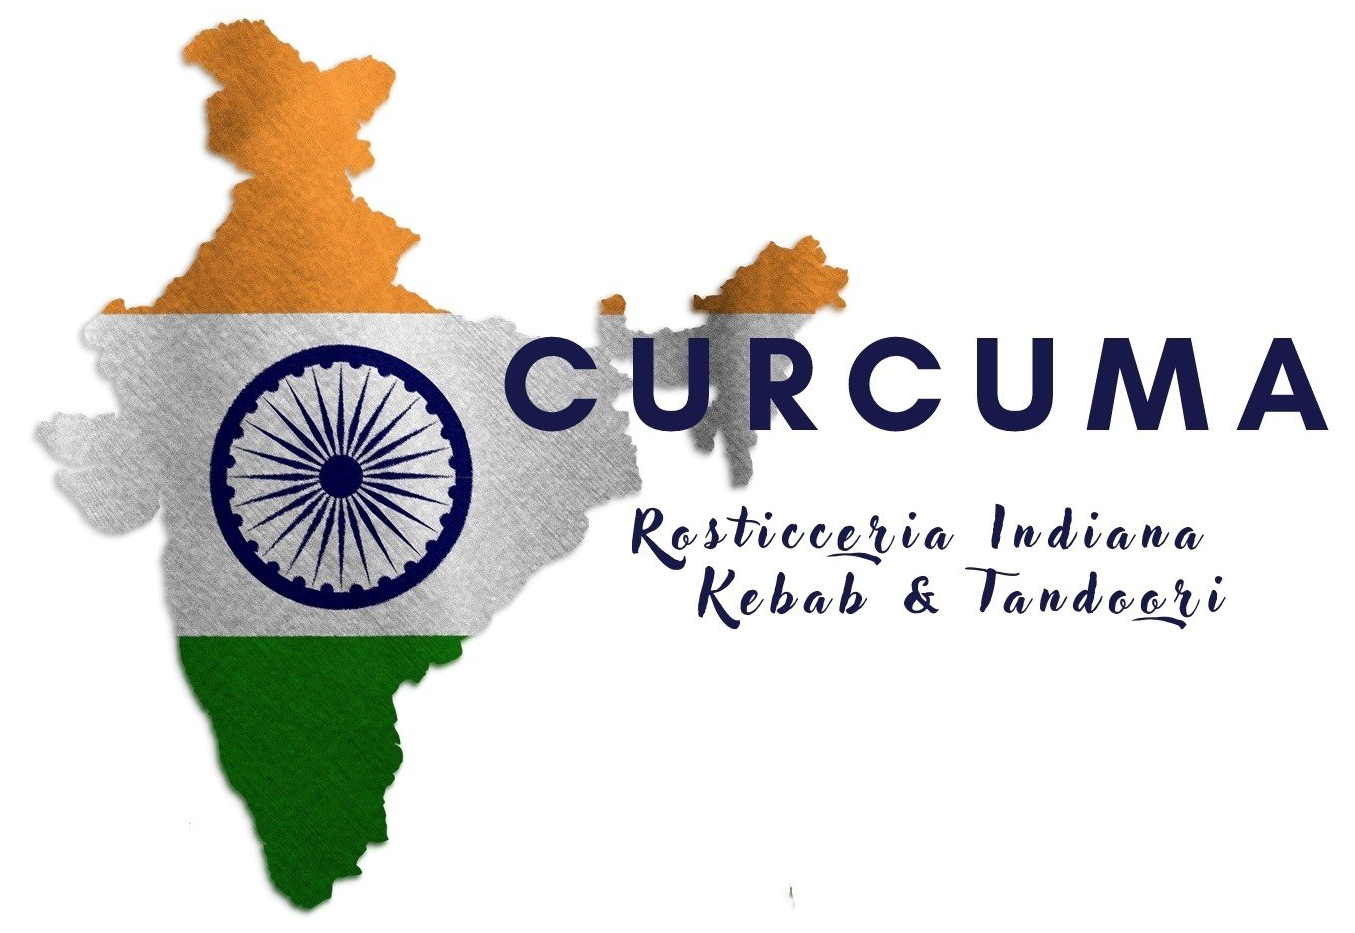 Curcuma - Rosticceria Indiana - Kebab & Tandoori logo